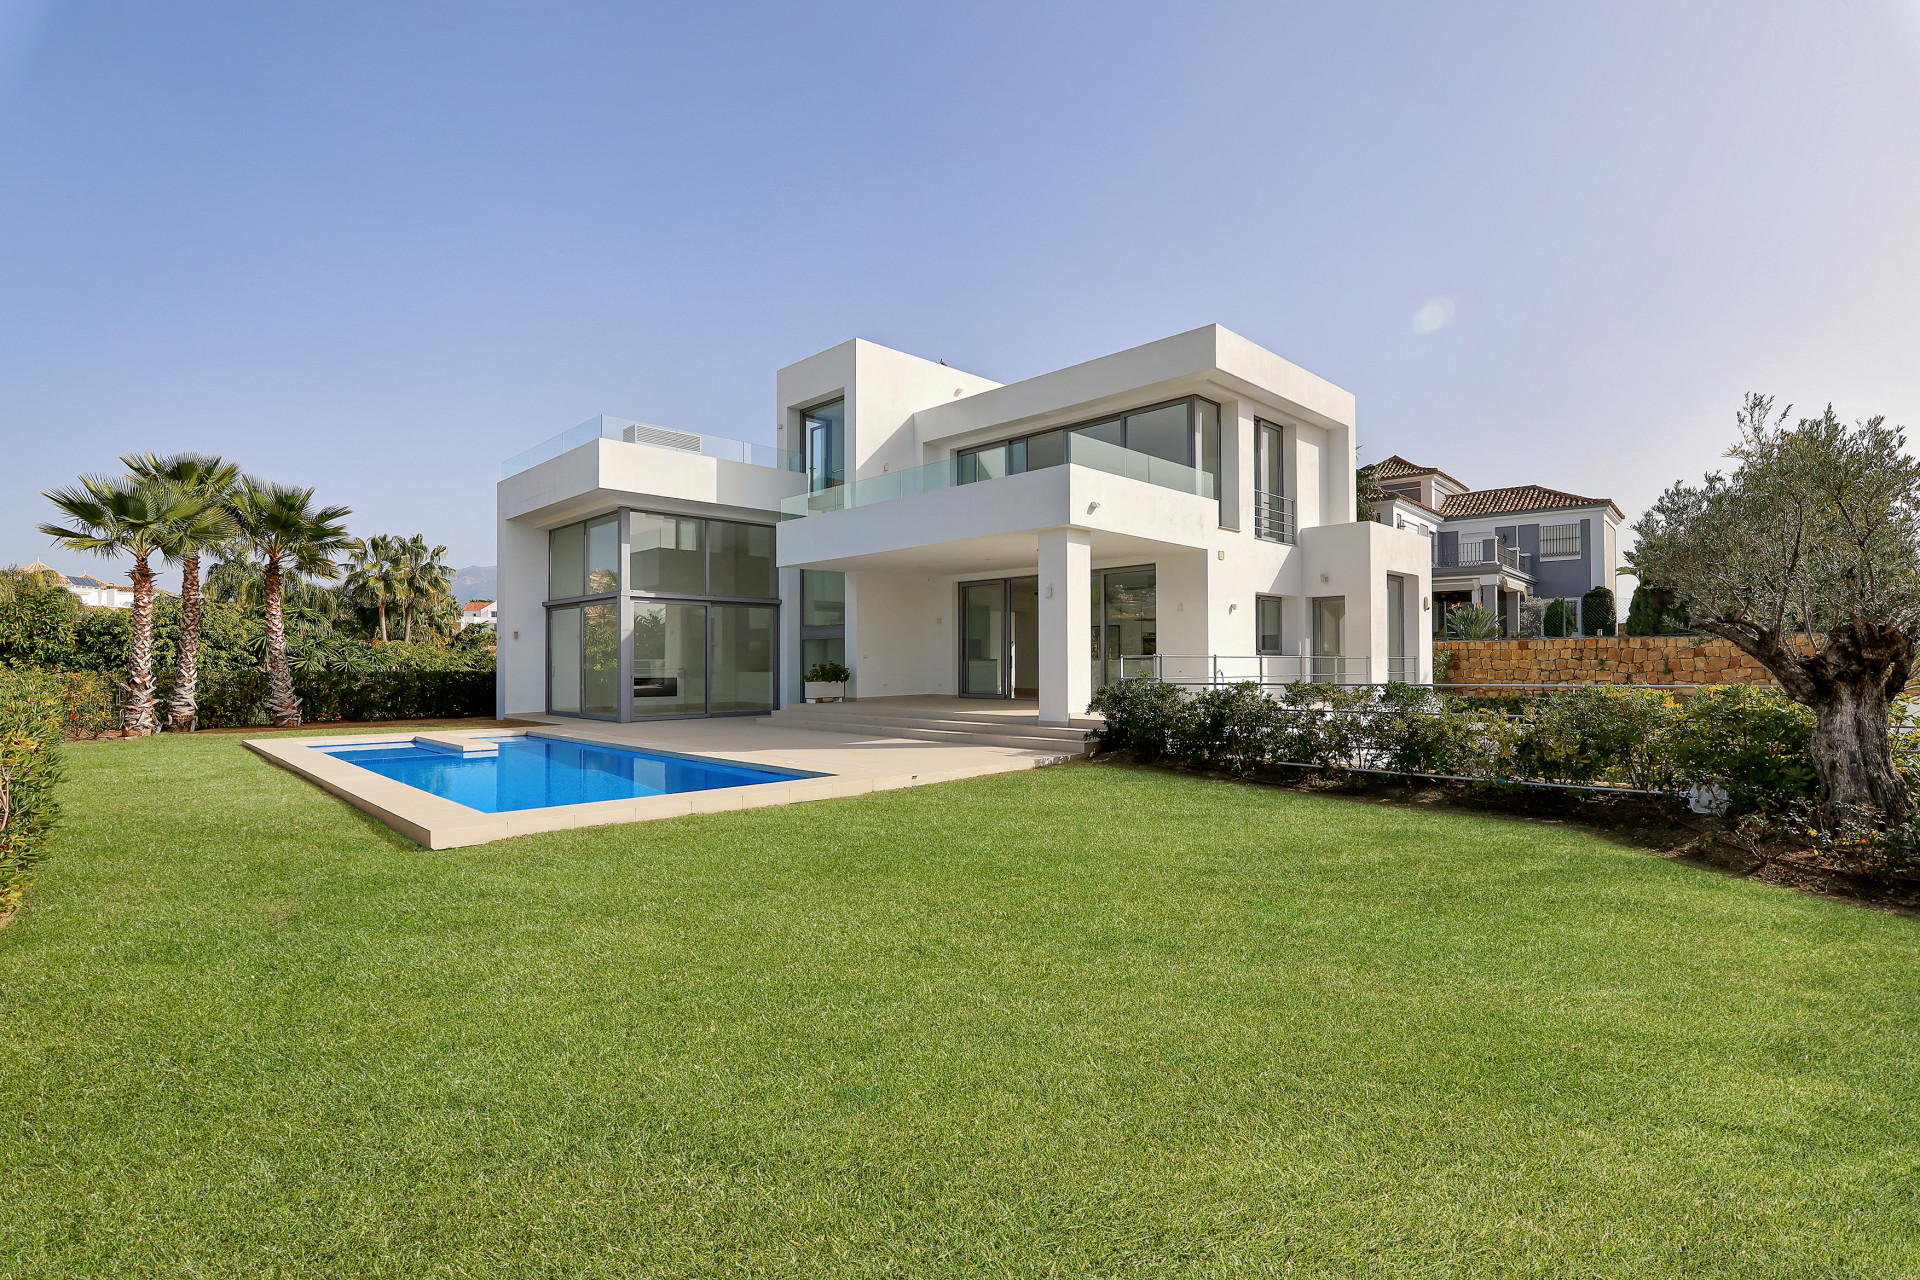 New built contemporary 4 bedroom quality villa in Puerto del Capitan, Benahavis